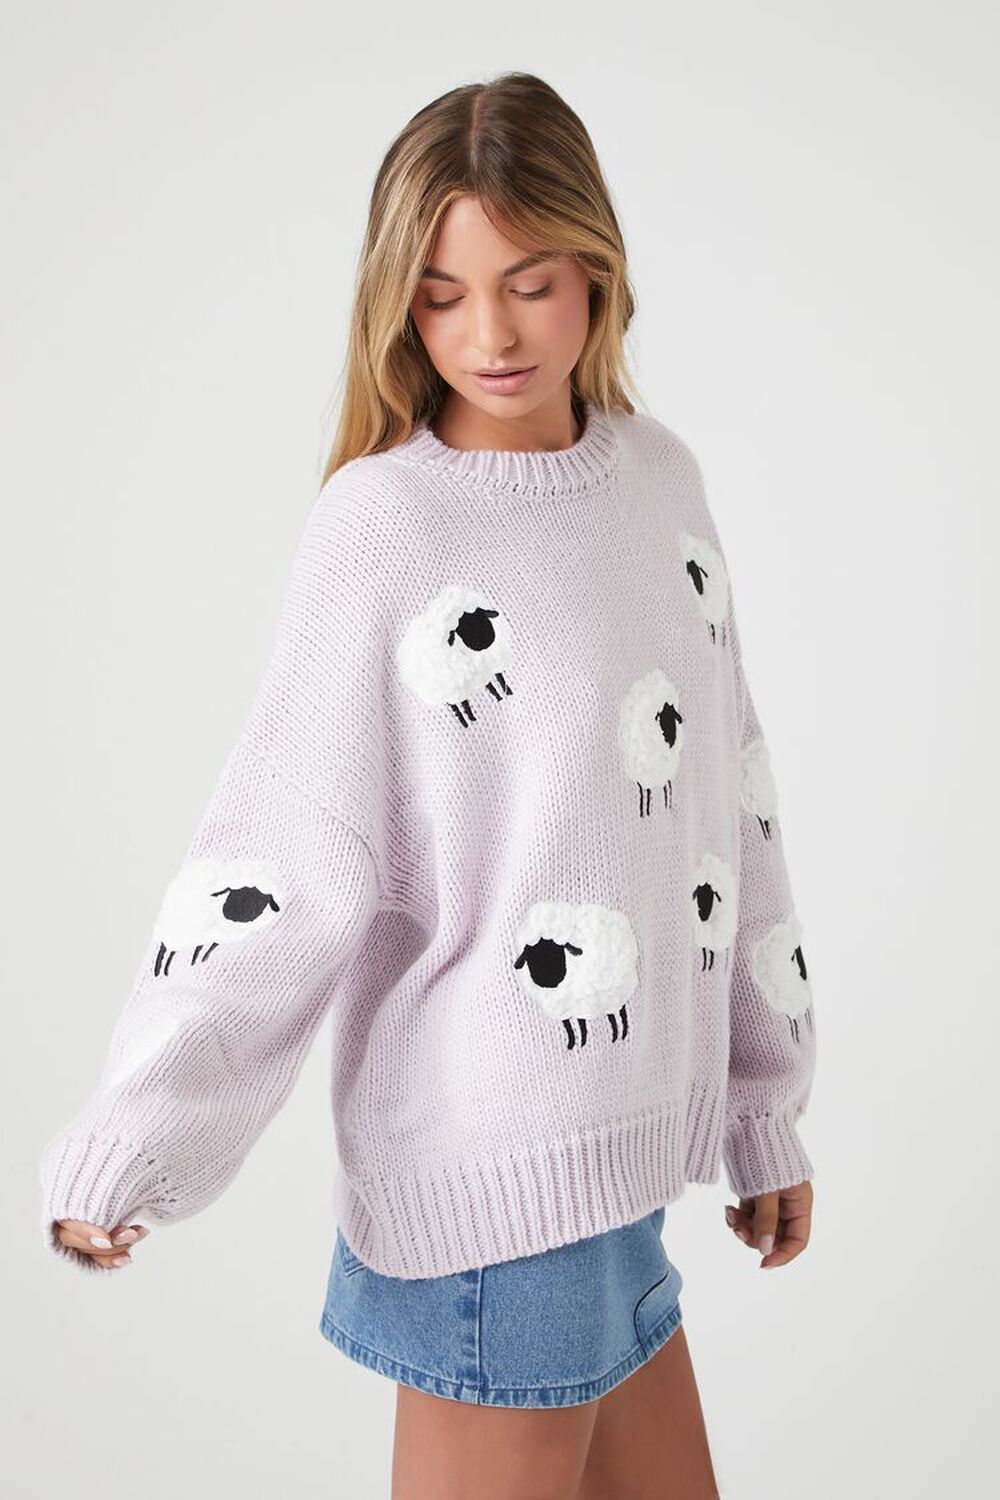 LAVENDER Sheep Drop-Sleeve Sweater, image 2